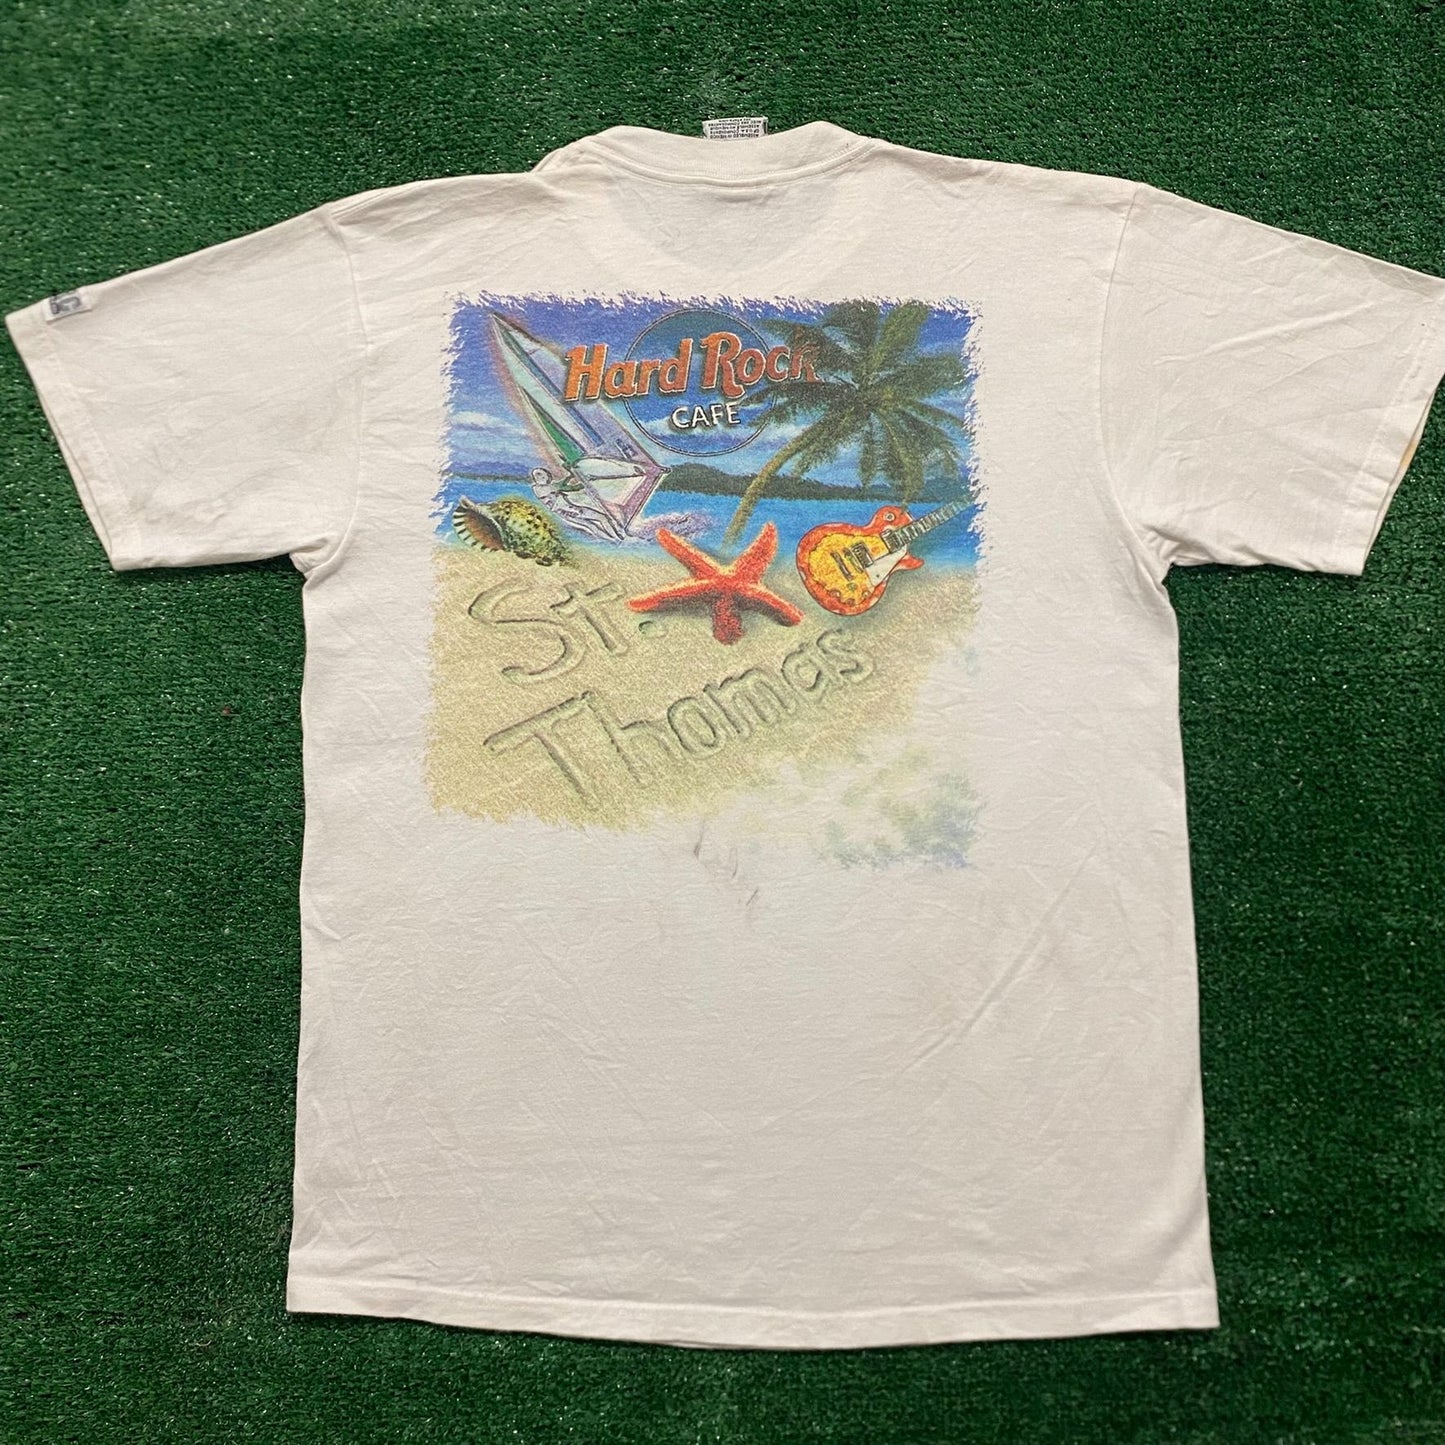 Vintage Y2K Hard Rock Cafe St. Thomas Tourist T-Shirt